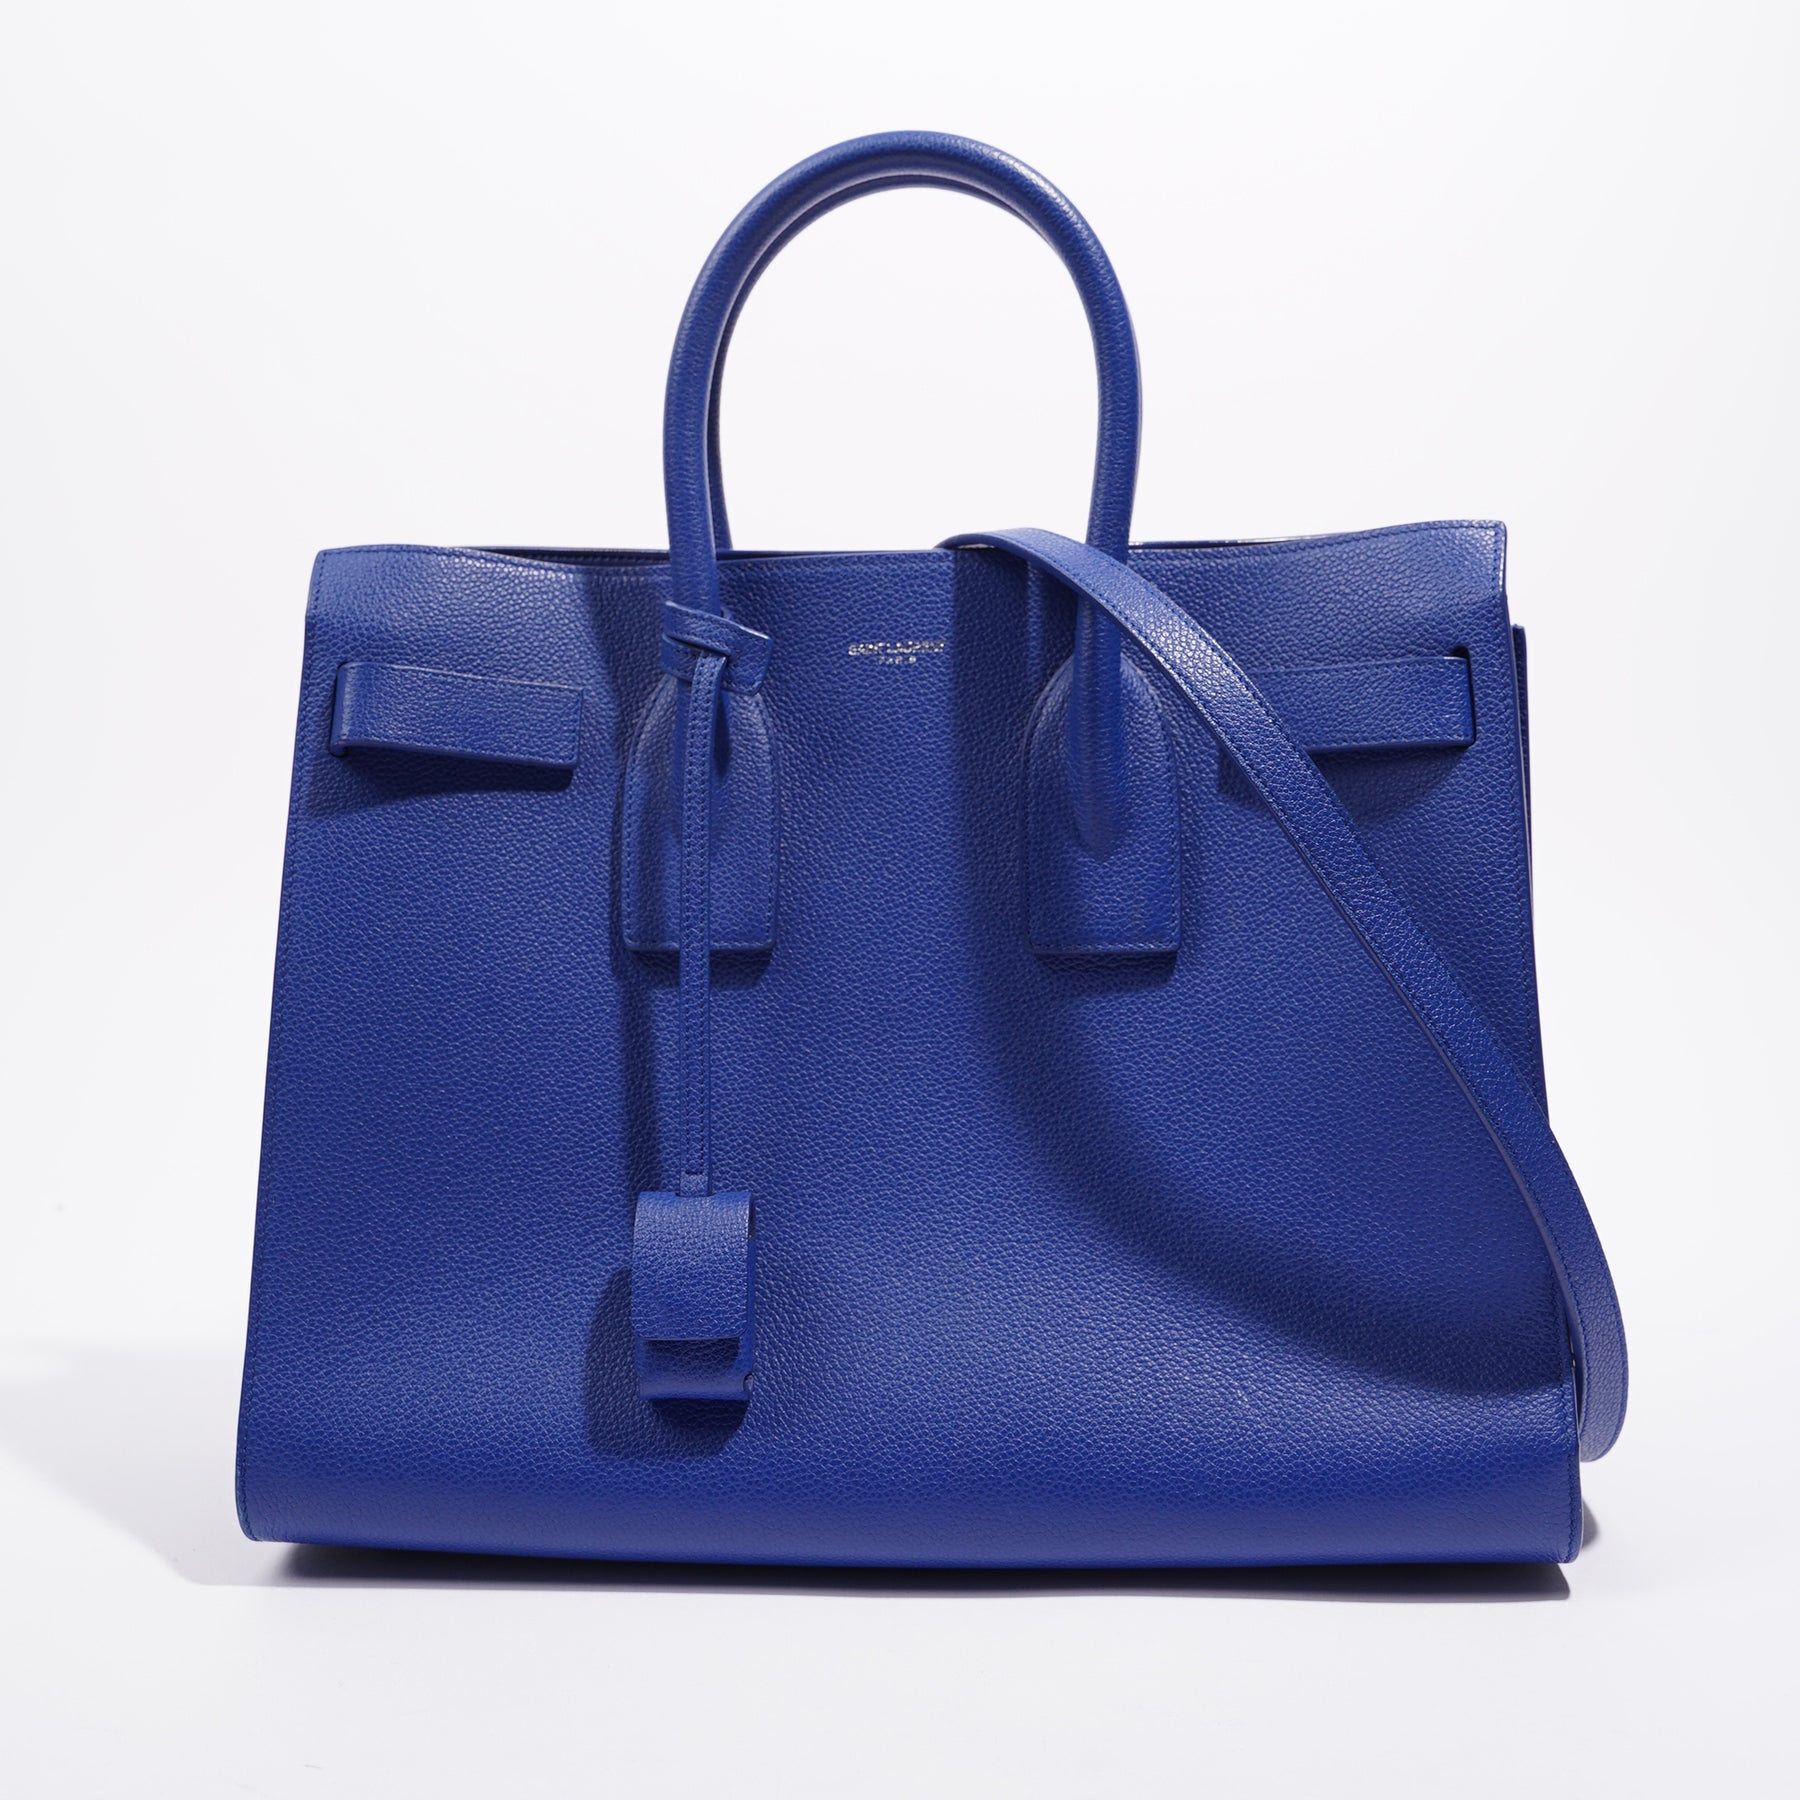 Shop Louis Vuitton Daily pouch (M62937) by design◇base